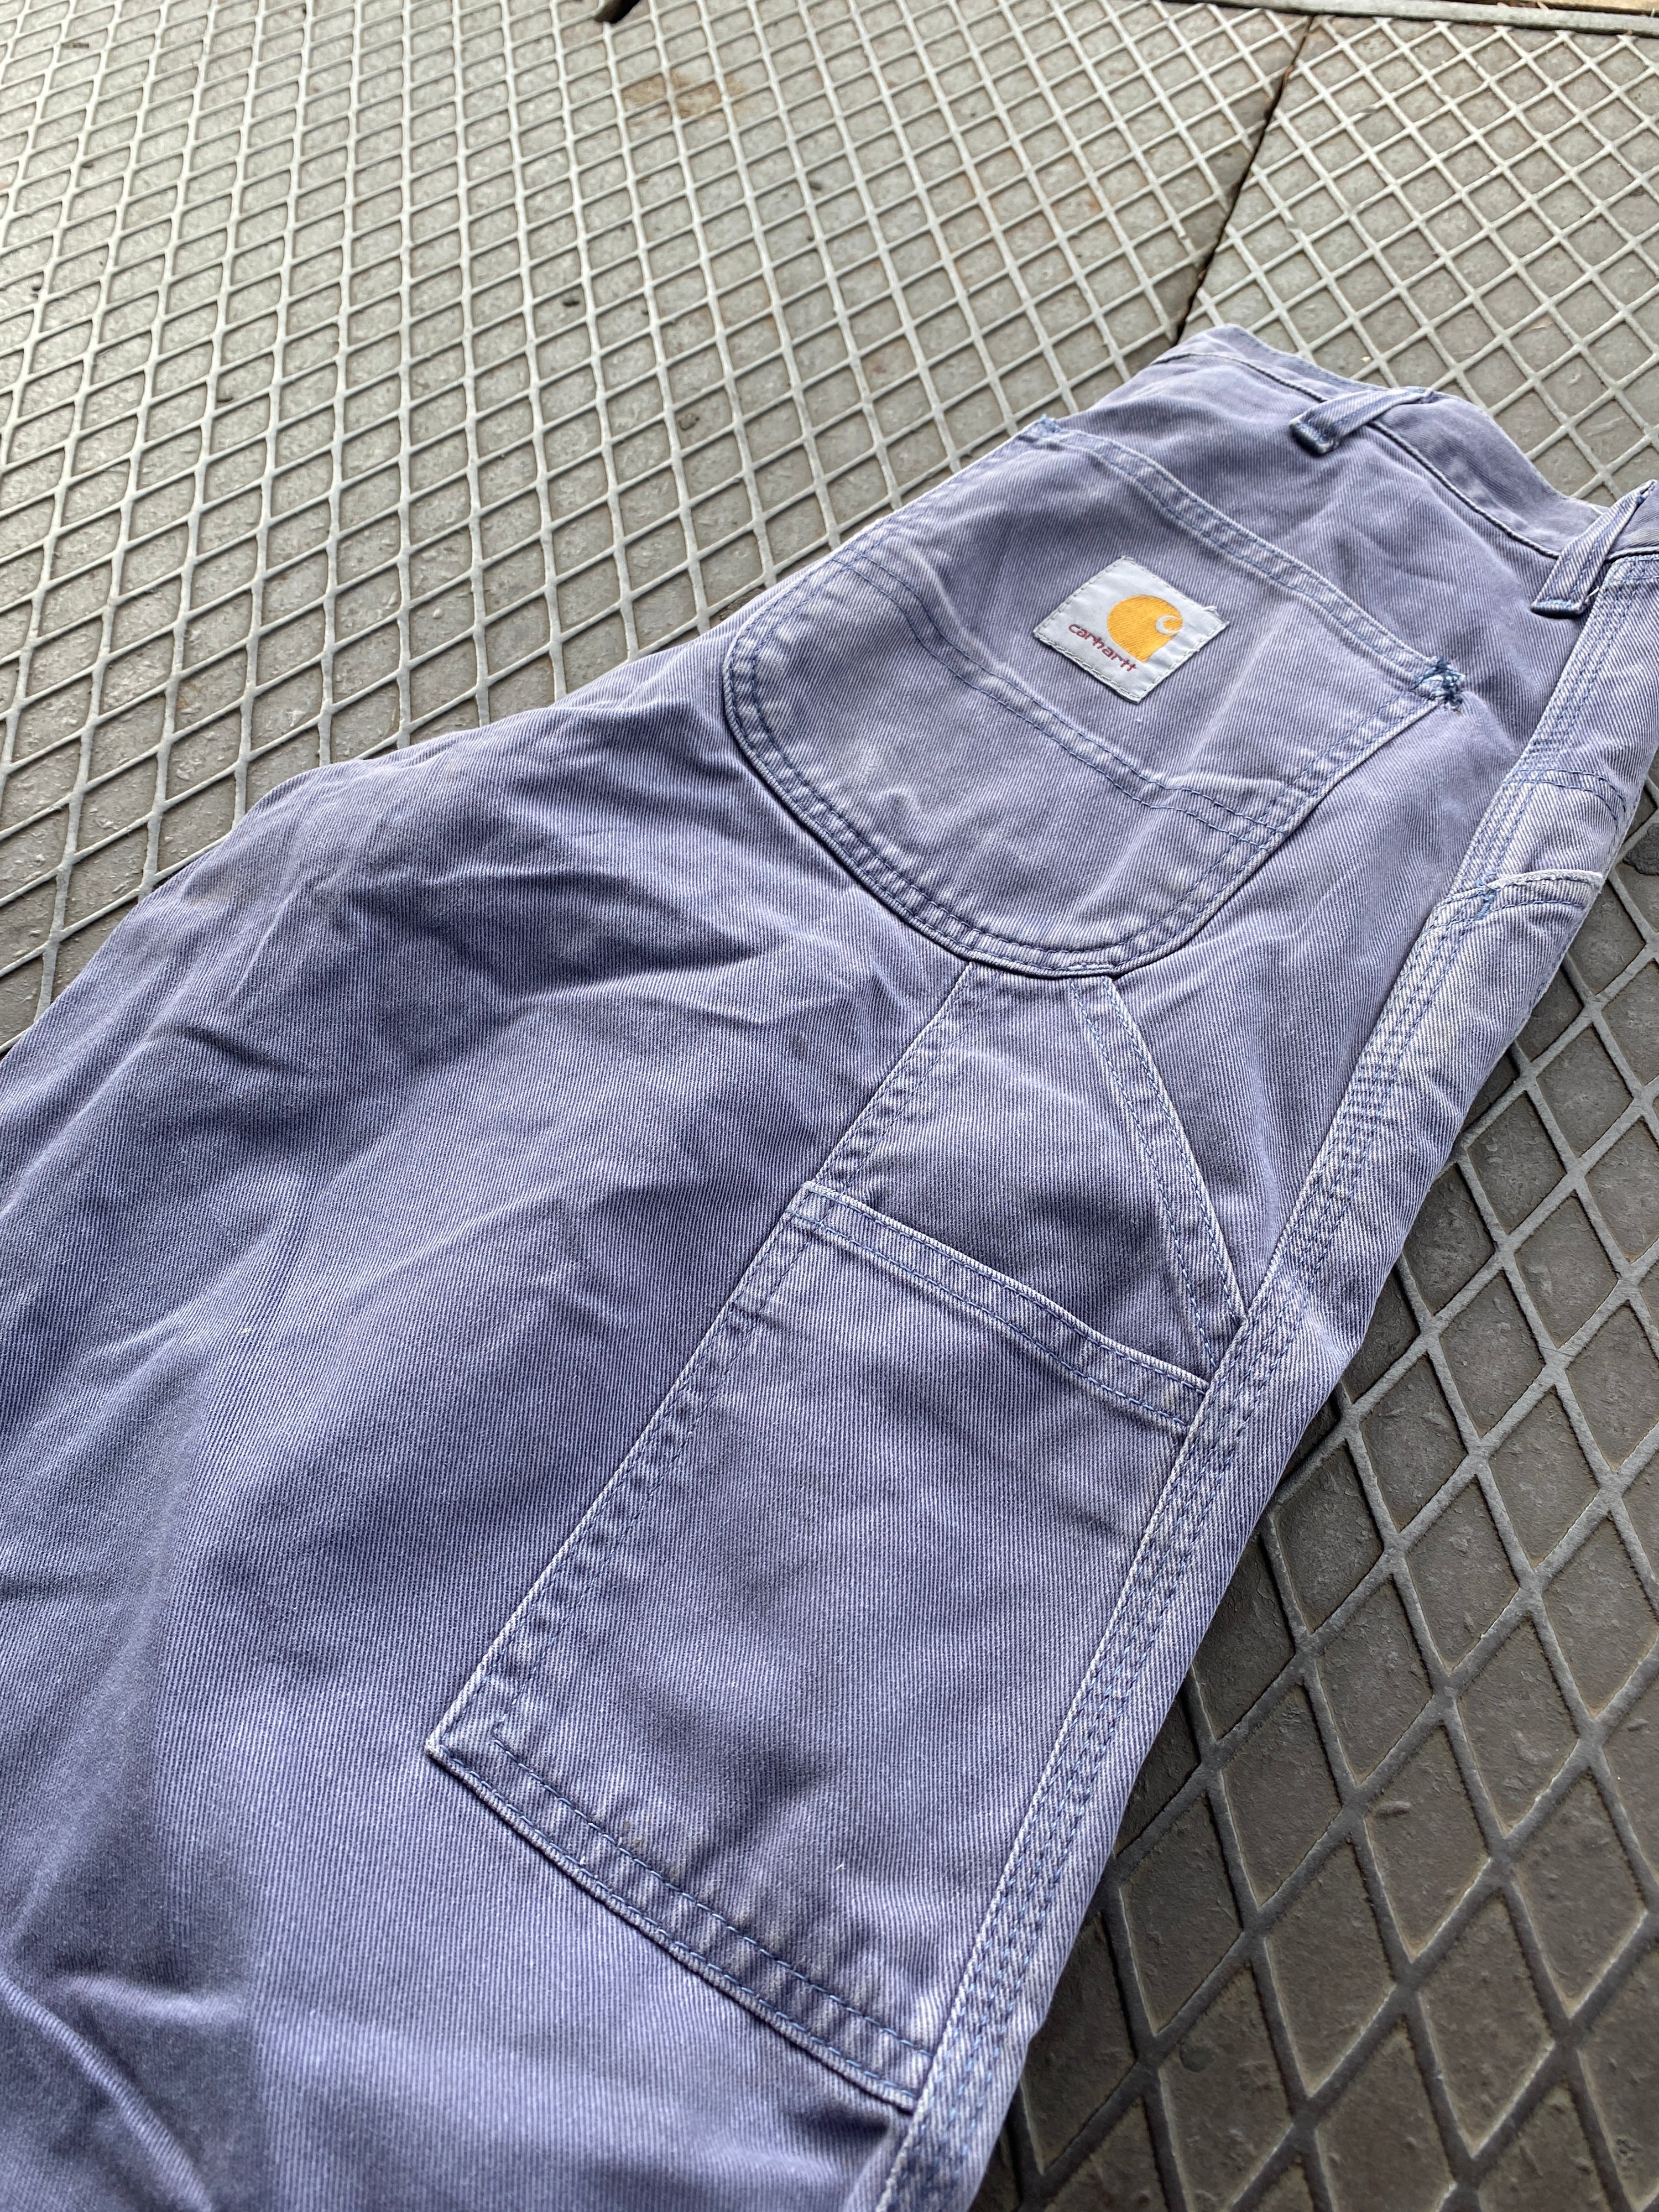 28 - Carhartt Faded Purple/Blue Carpenter Shorts S250